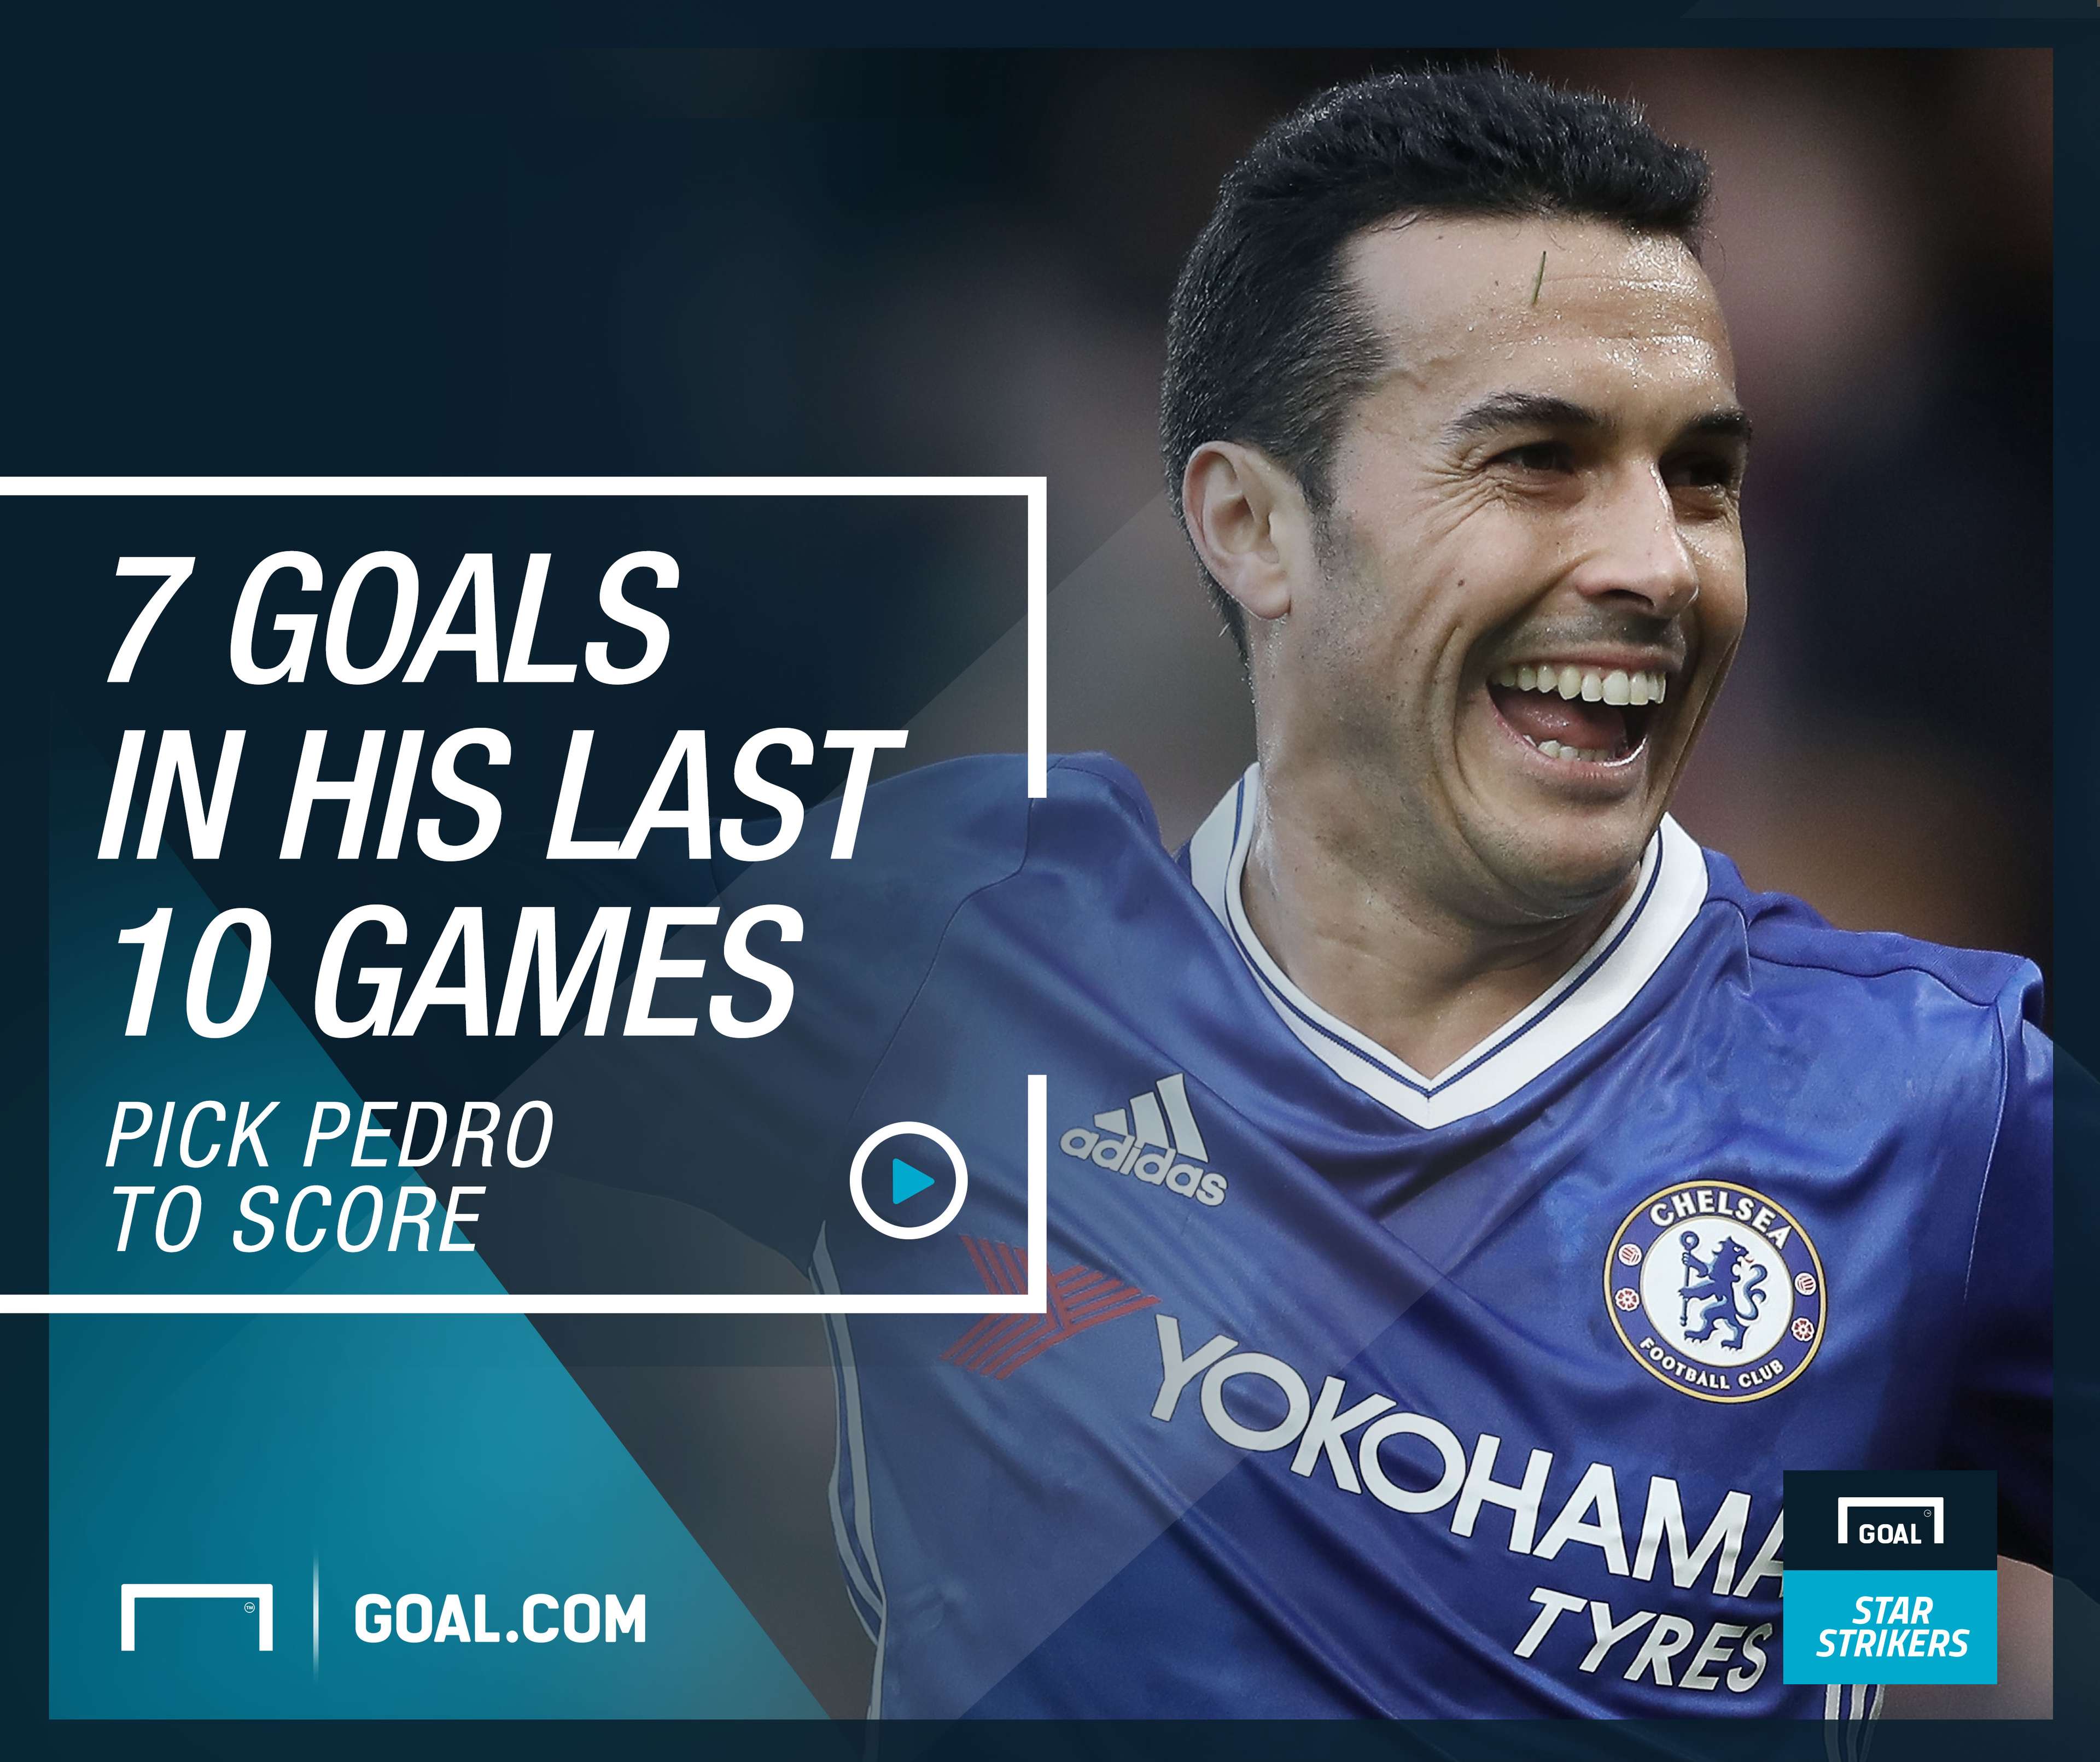 Goal Star Strikers - Pedro